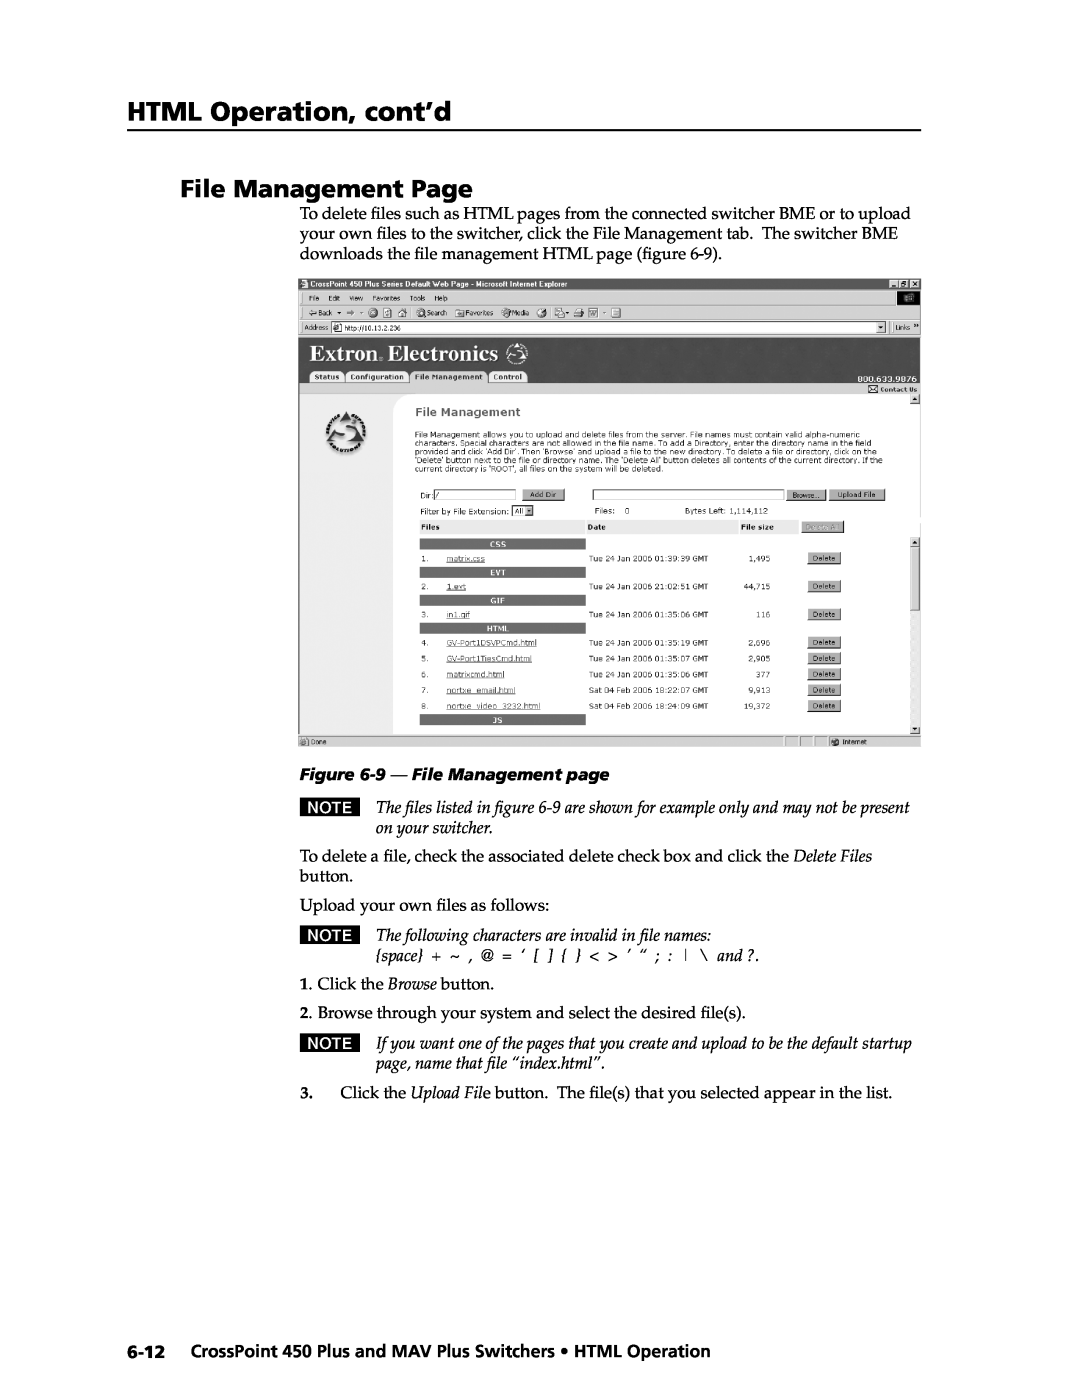 Extron electronic MAV Plus, 450 Plus manual File Management Page, HTML Operation, cont’d, 9 - File Management page 